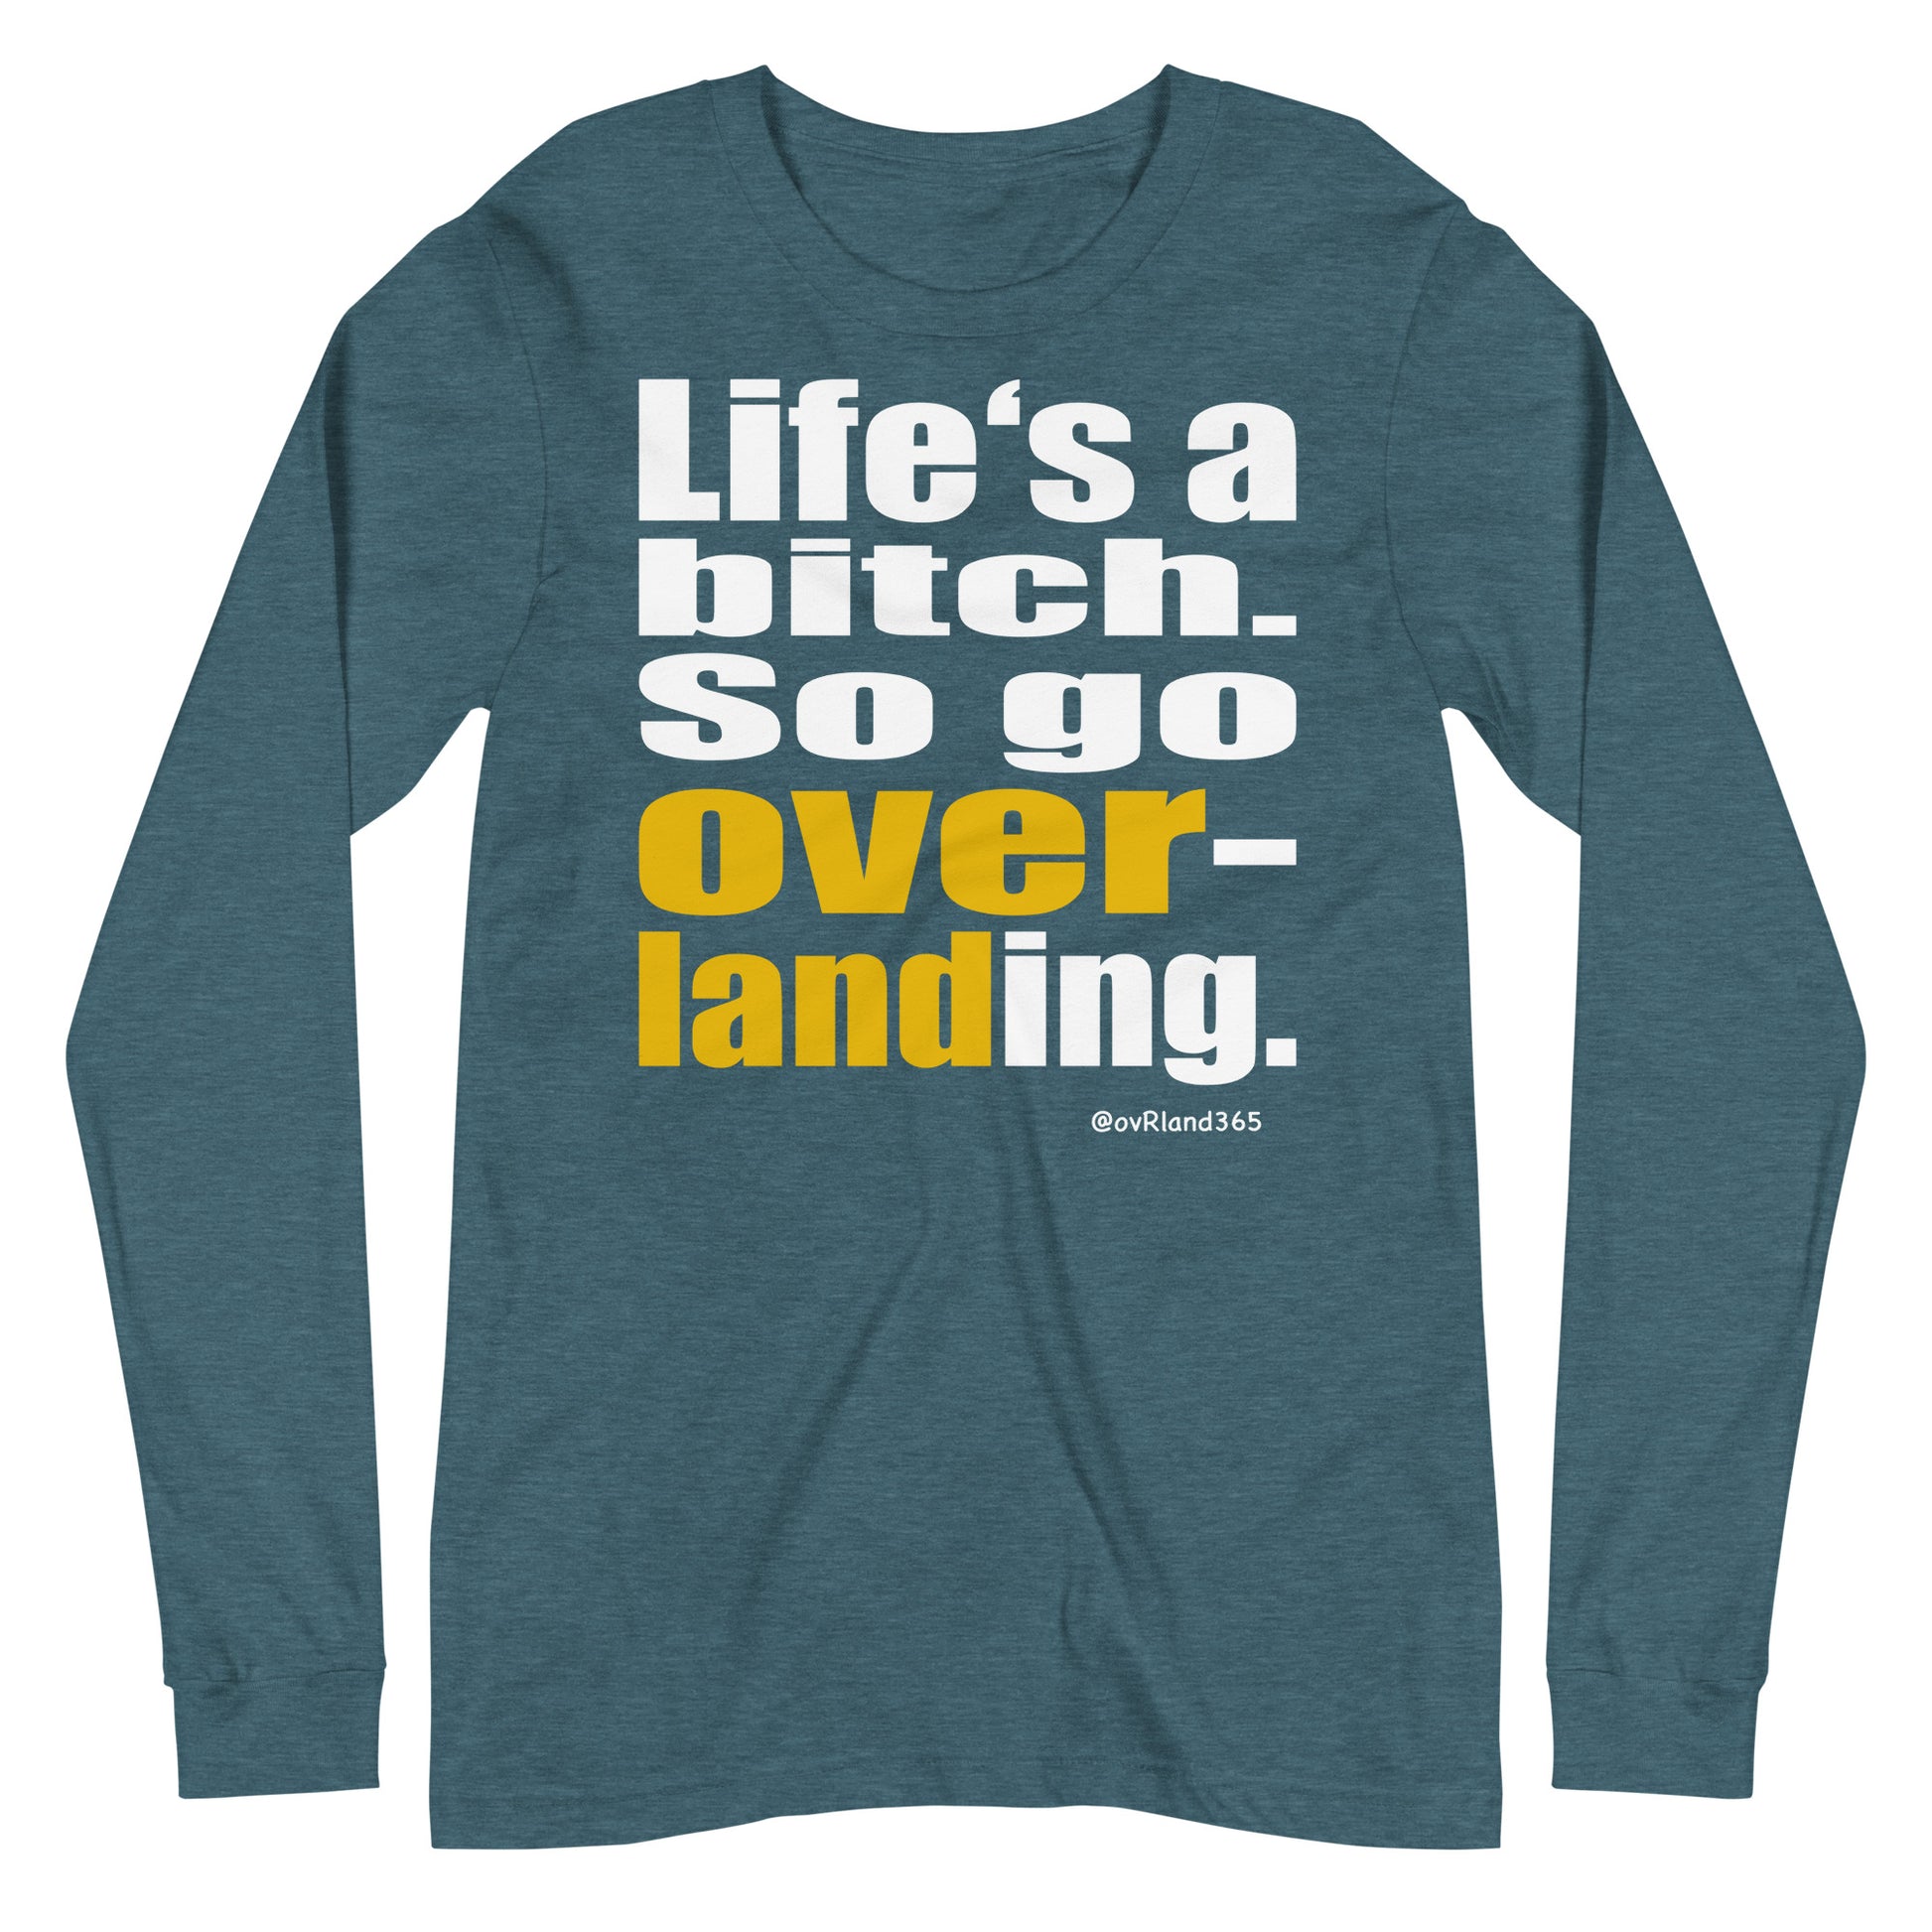 "Life's a bitch. So go overlanding." Teal long-sleeve. overland365.com